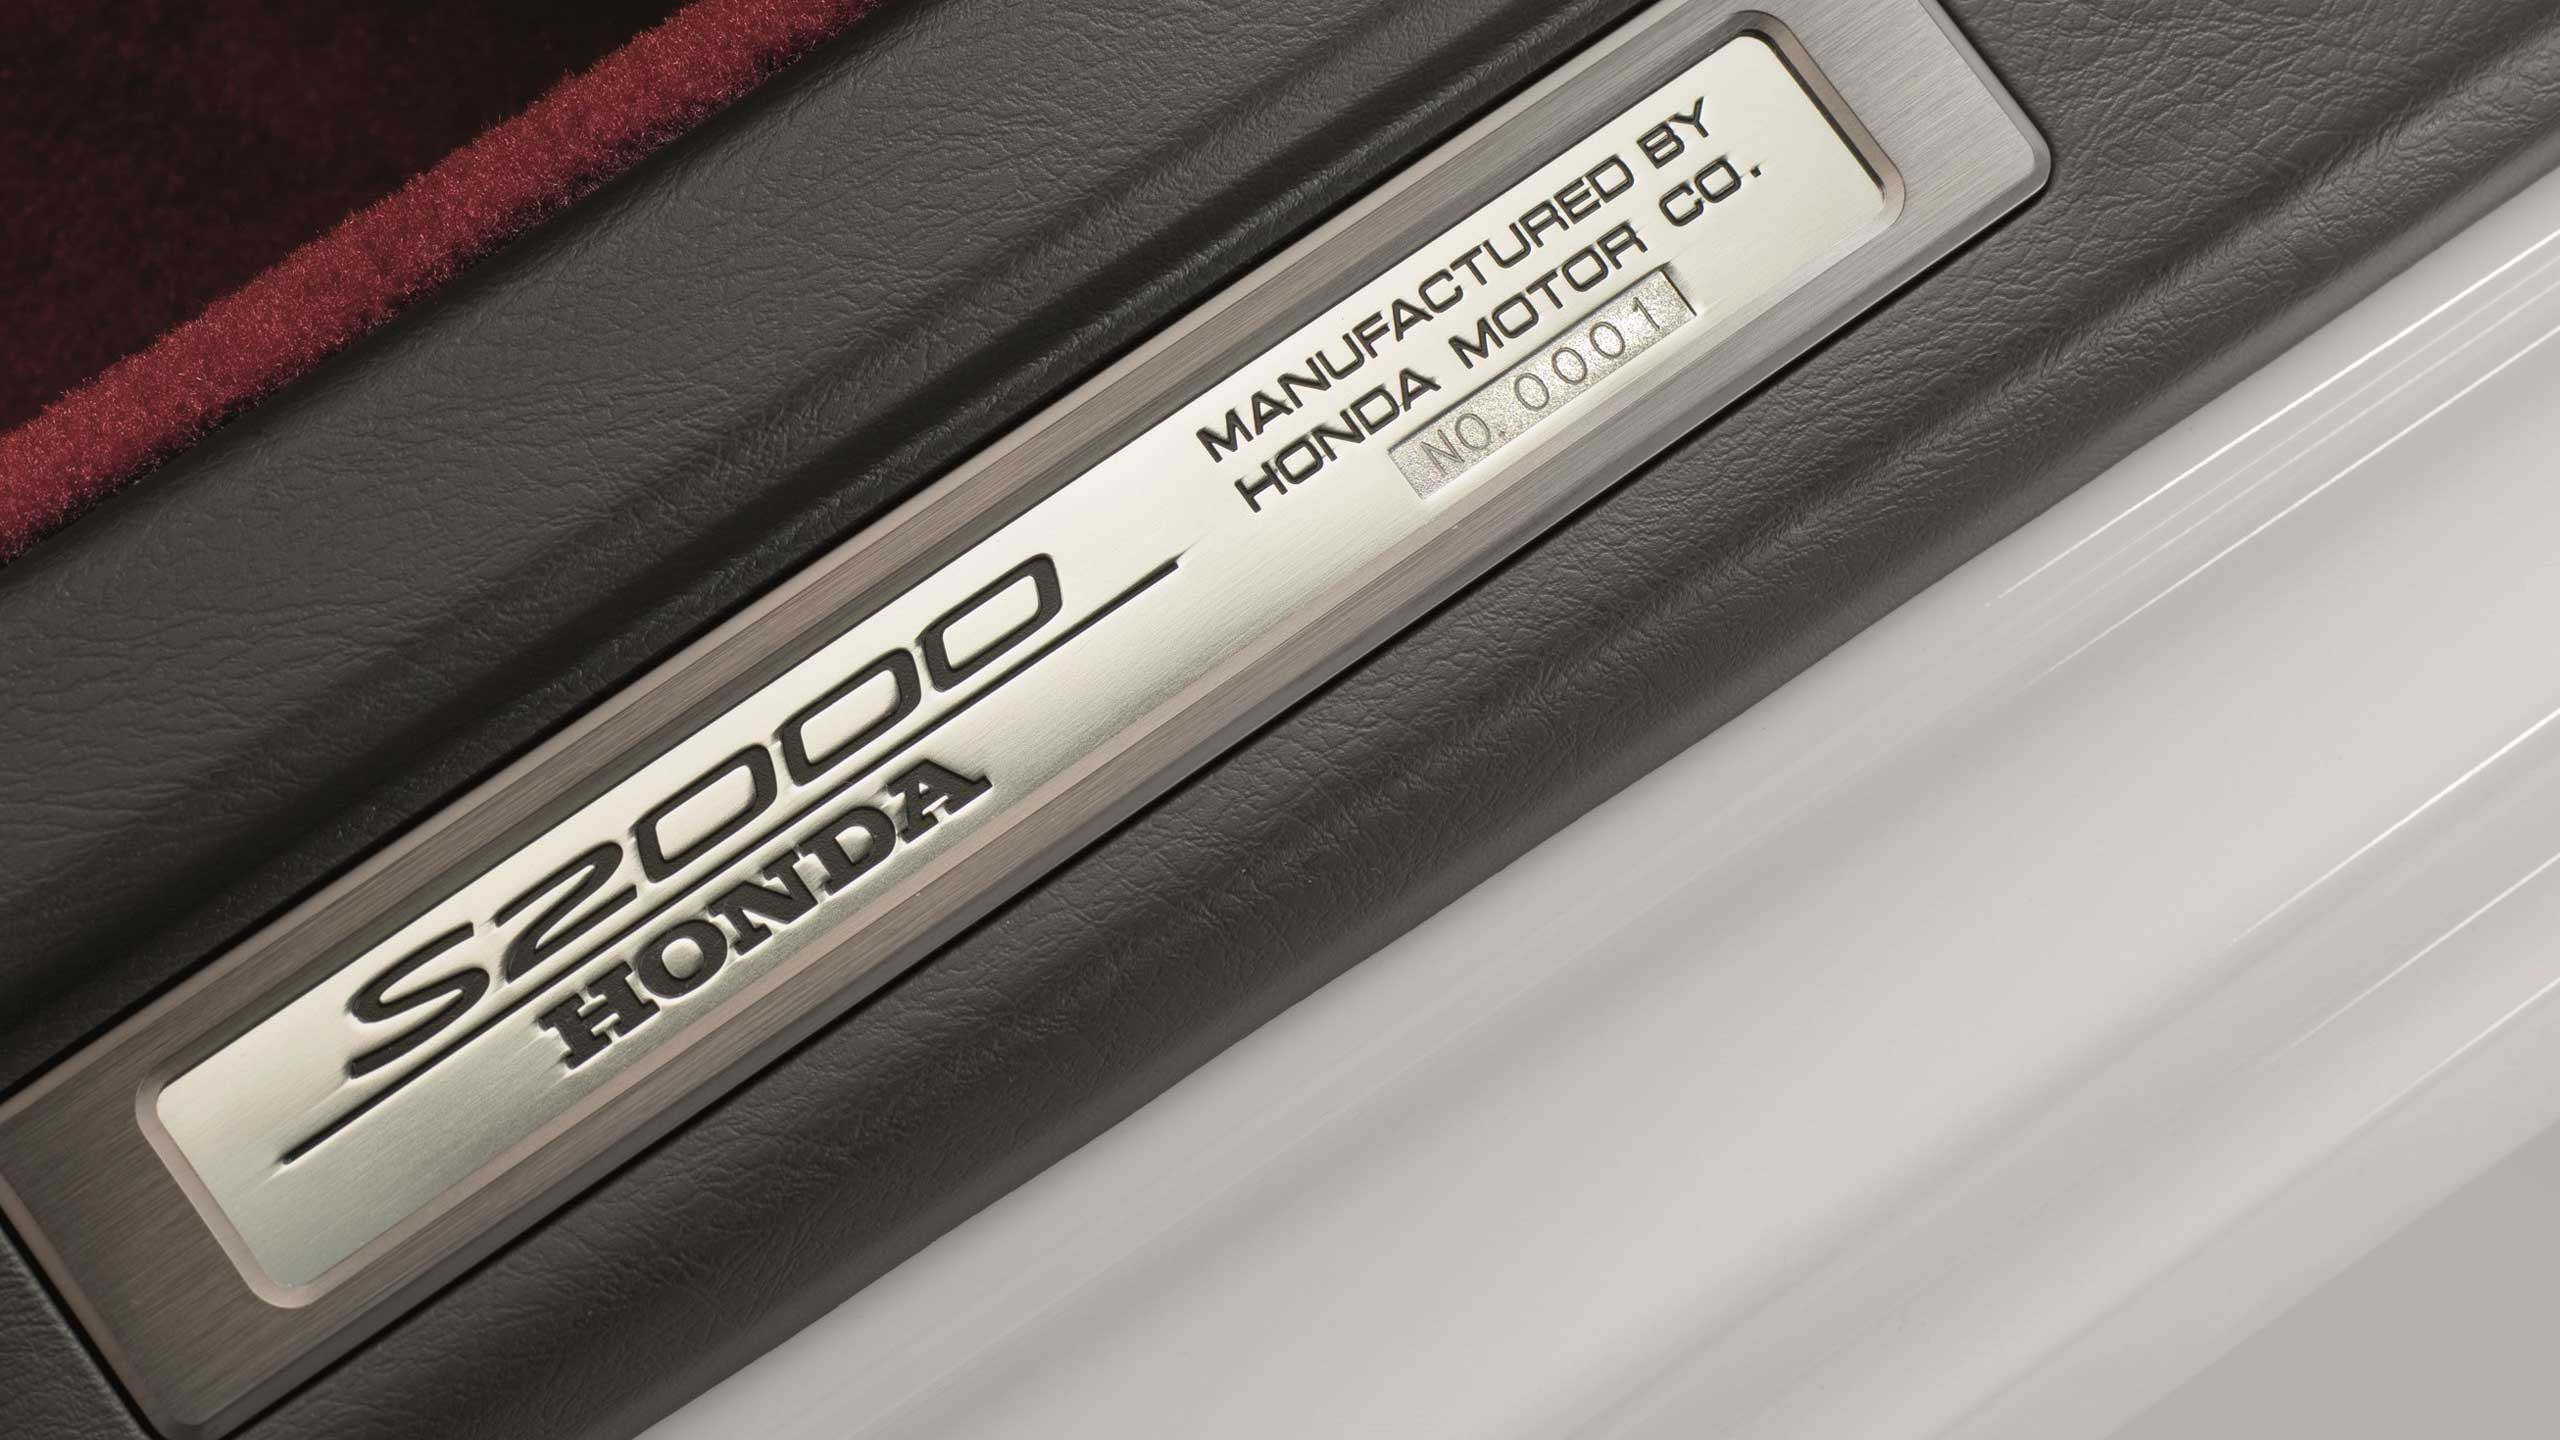 Close up of S2000 internal branding.